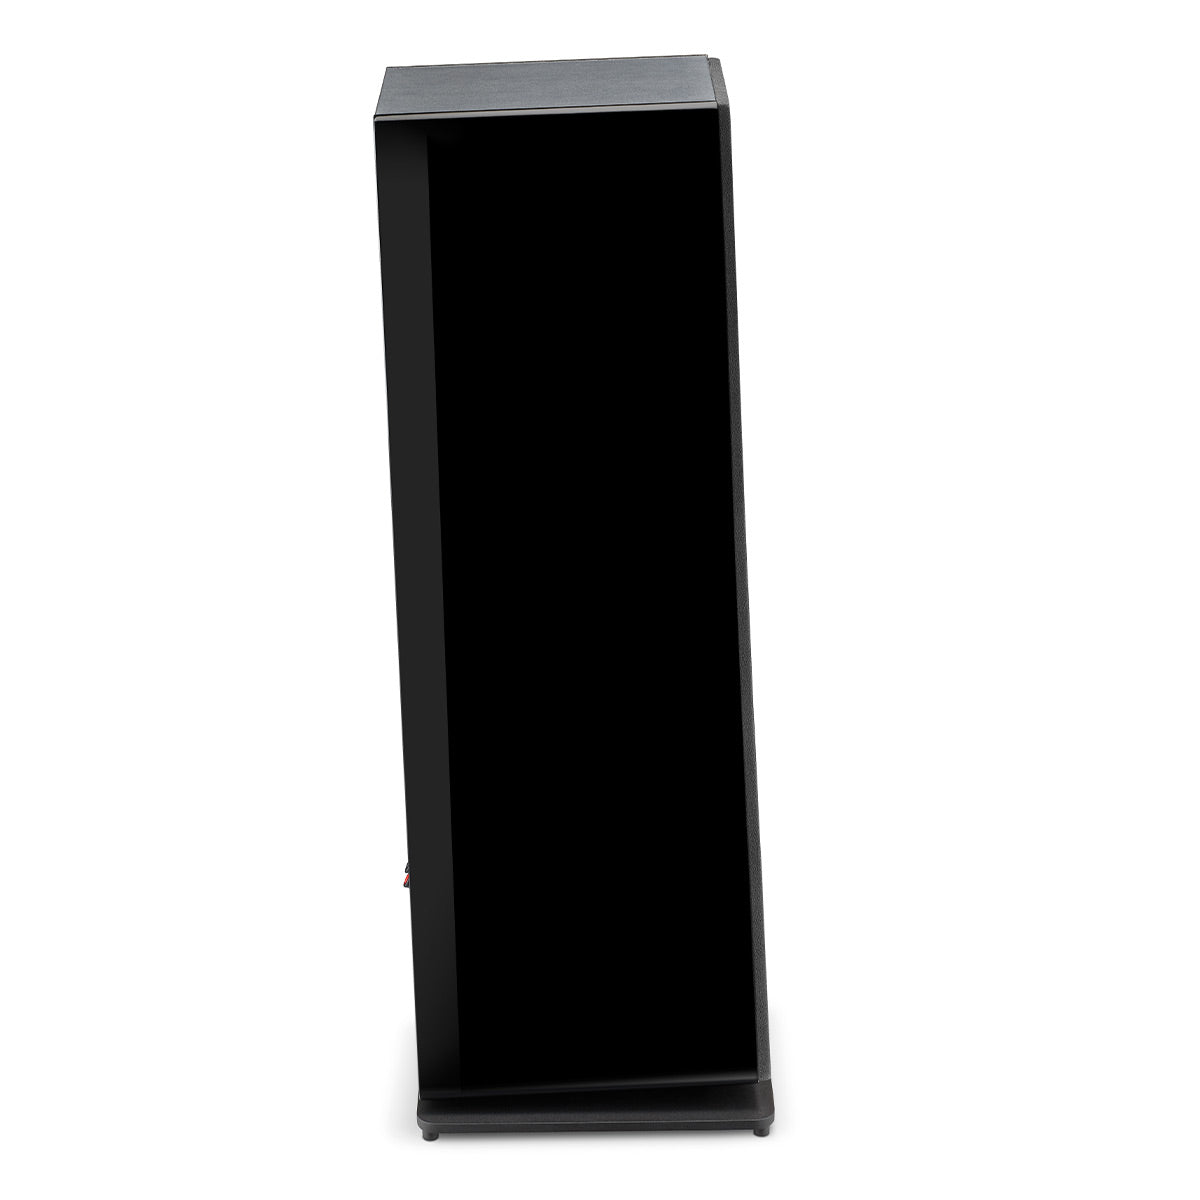 Focal Vestia No.2 3-Way Bass-Reflex Floorstanding Loudspeaker with 2 Woofers - Pair (Black High Gloss)